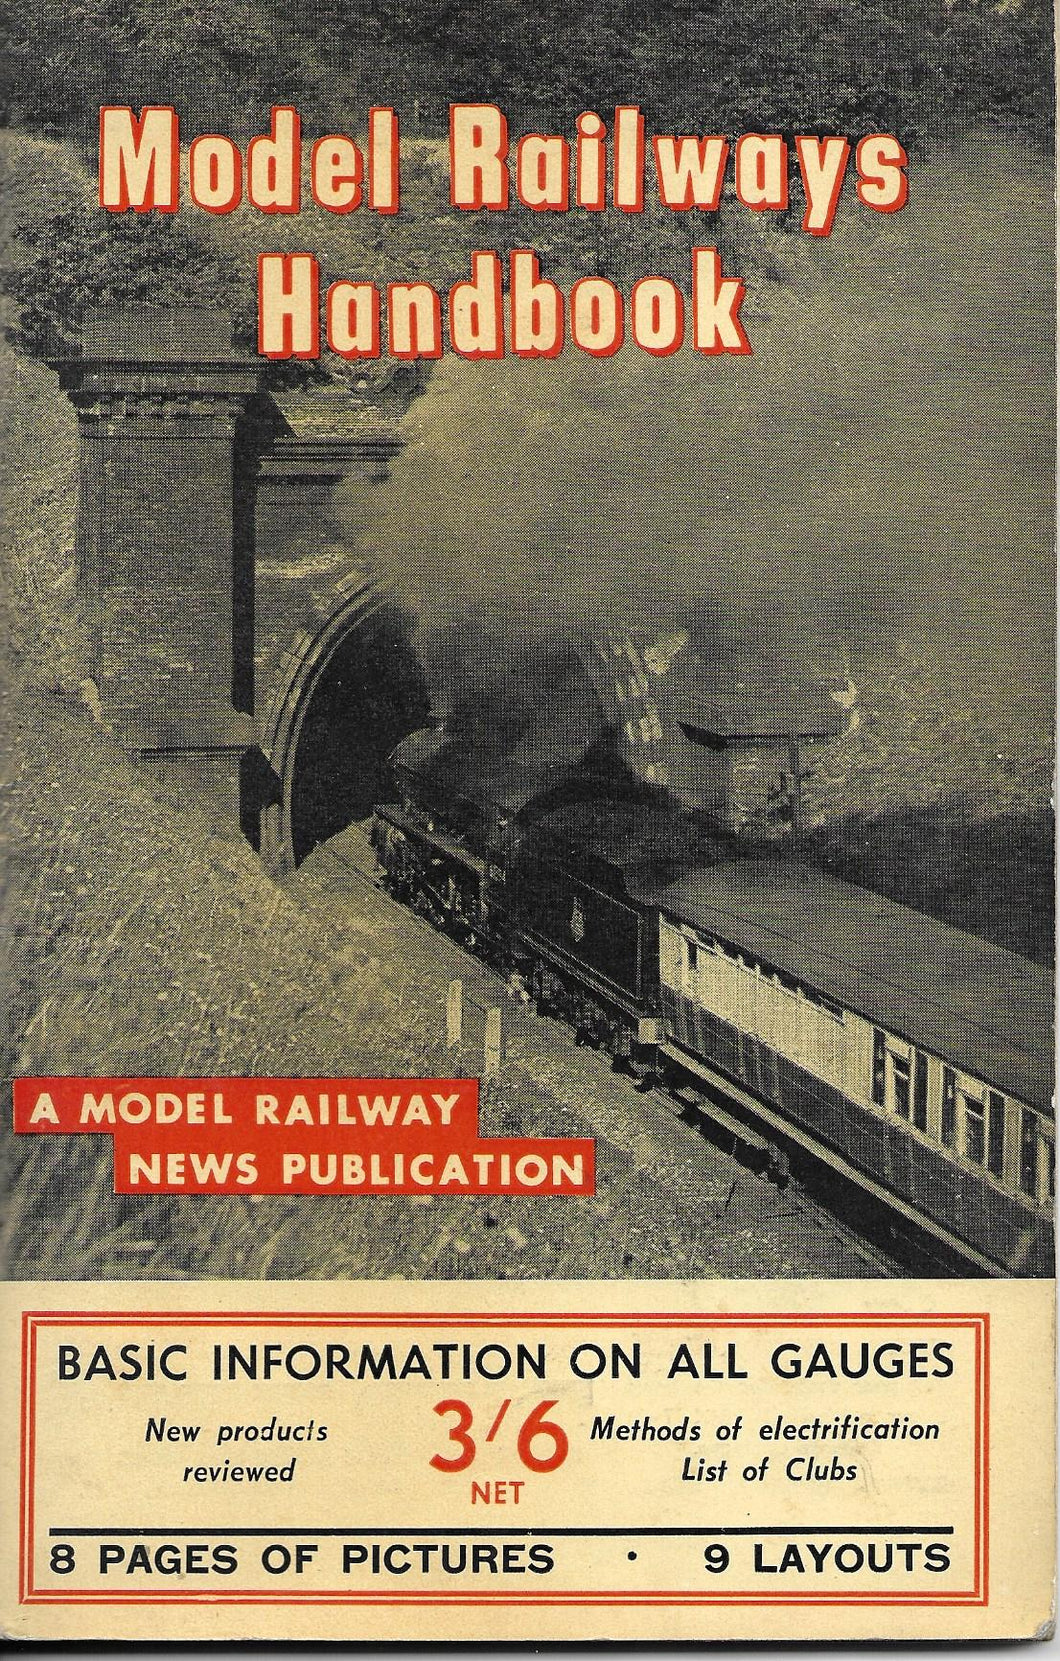 Model Railways Handbook, Model Railway News Publication. 1961, Percival Marshall